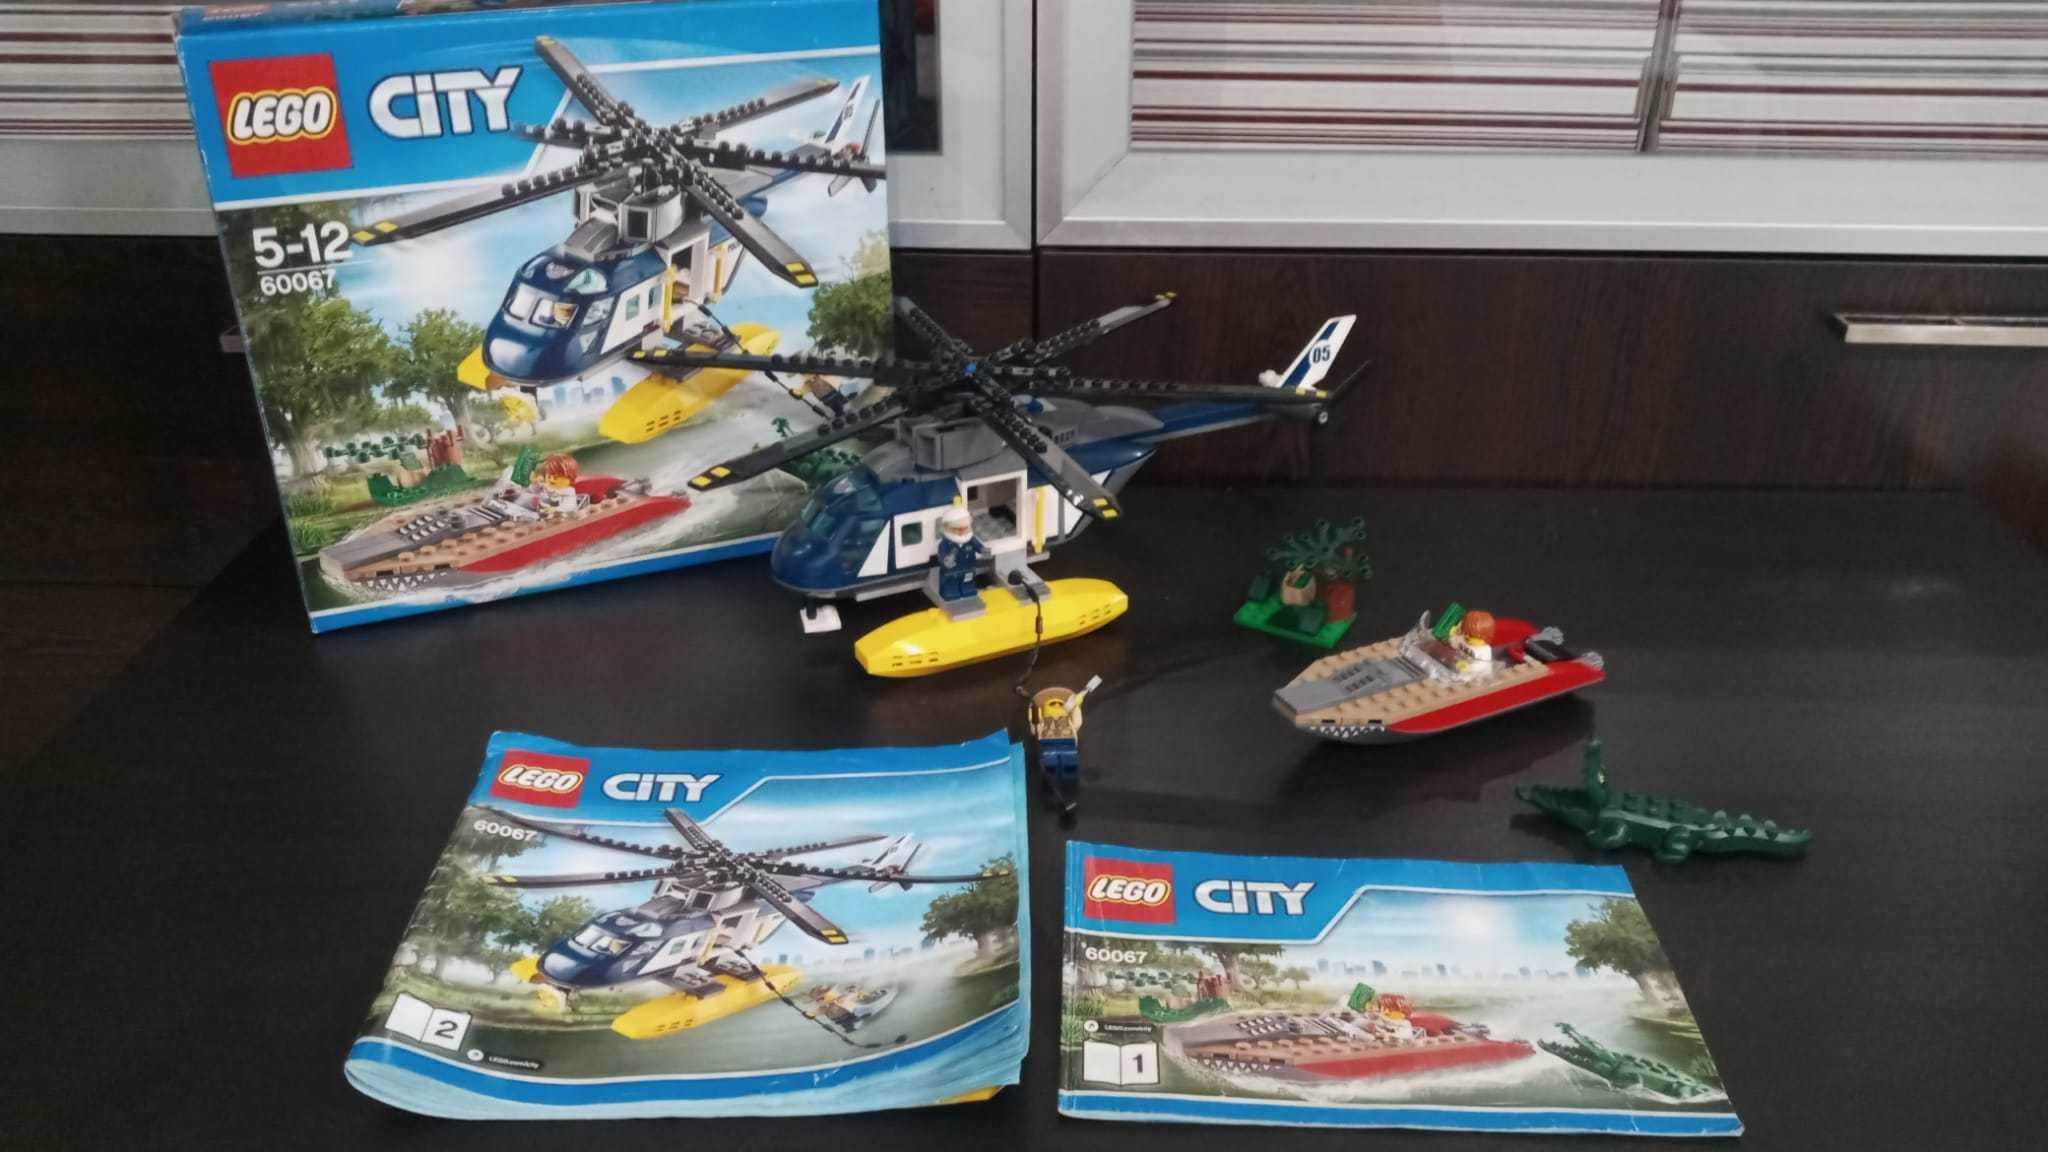 LEGO CITY 60067 Pościg śmigłowcem, komplet + instrukcja + pudełko